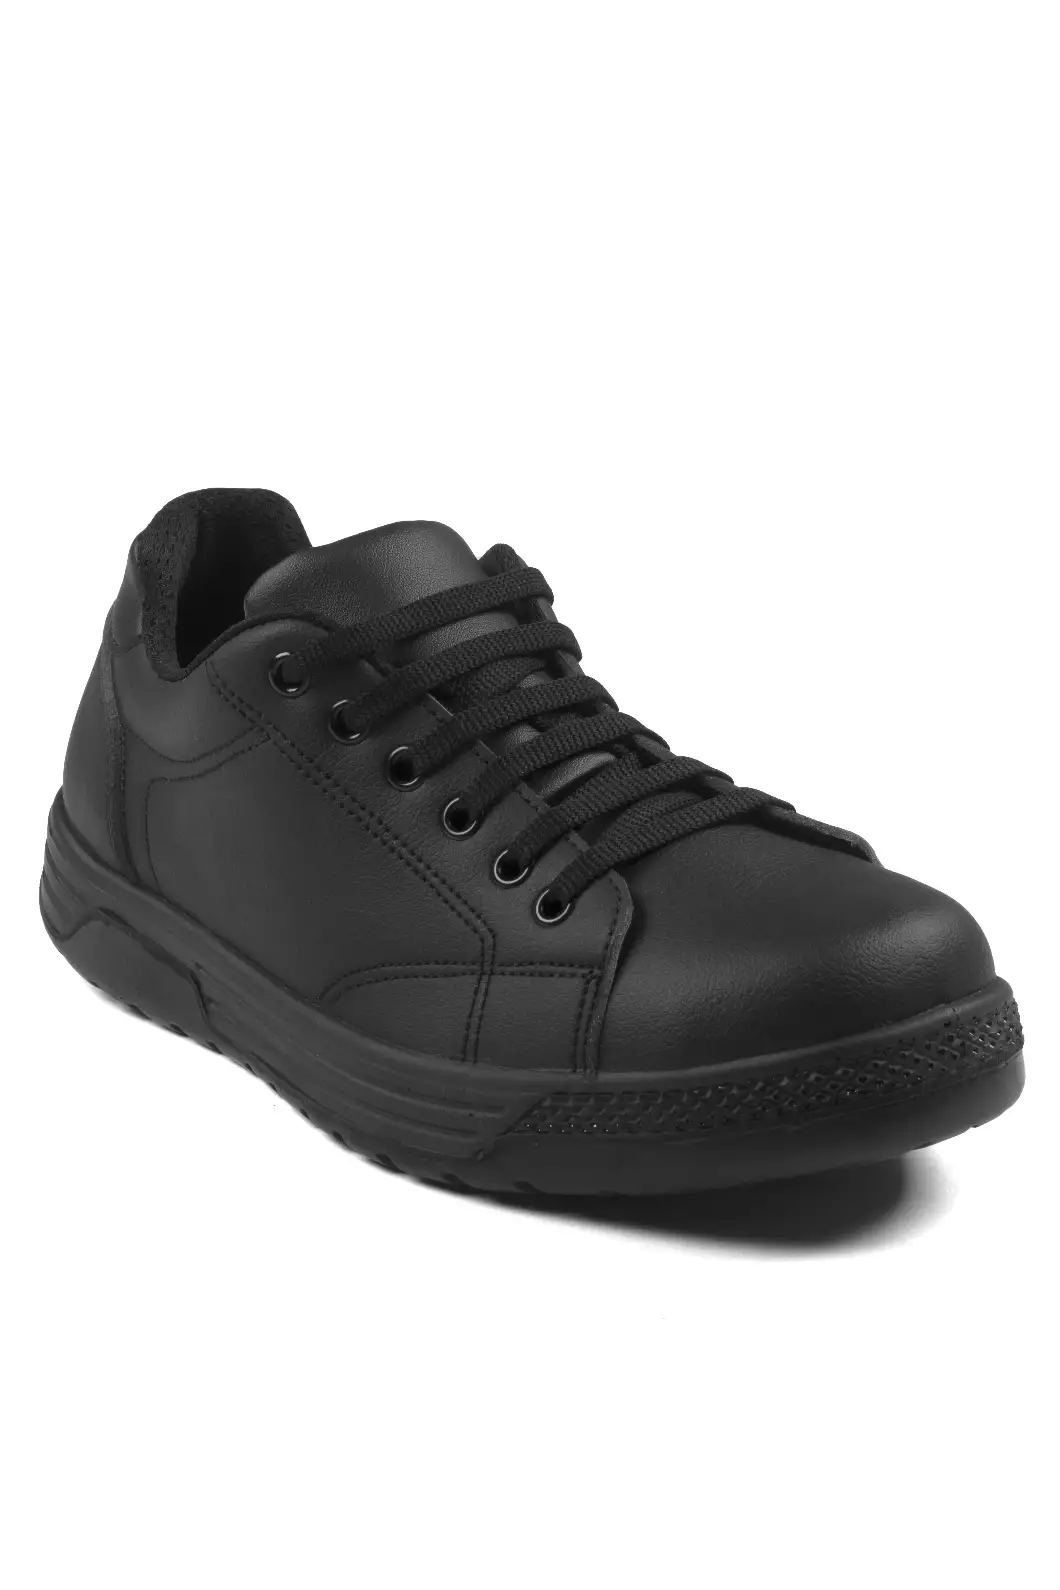 Scarpa sneaker con puntale microfibra comfort unisex - isacco